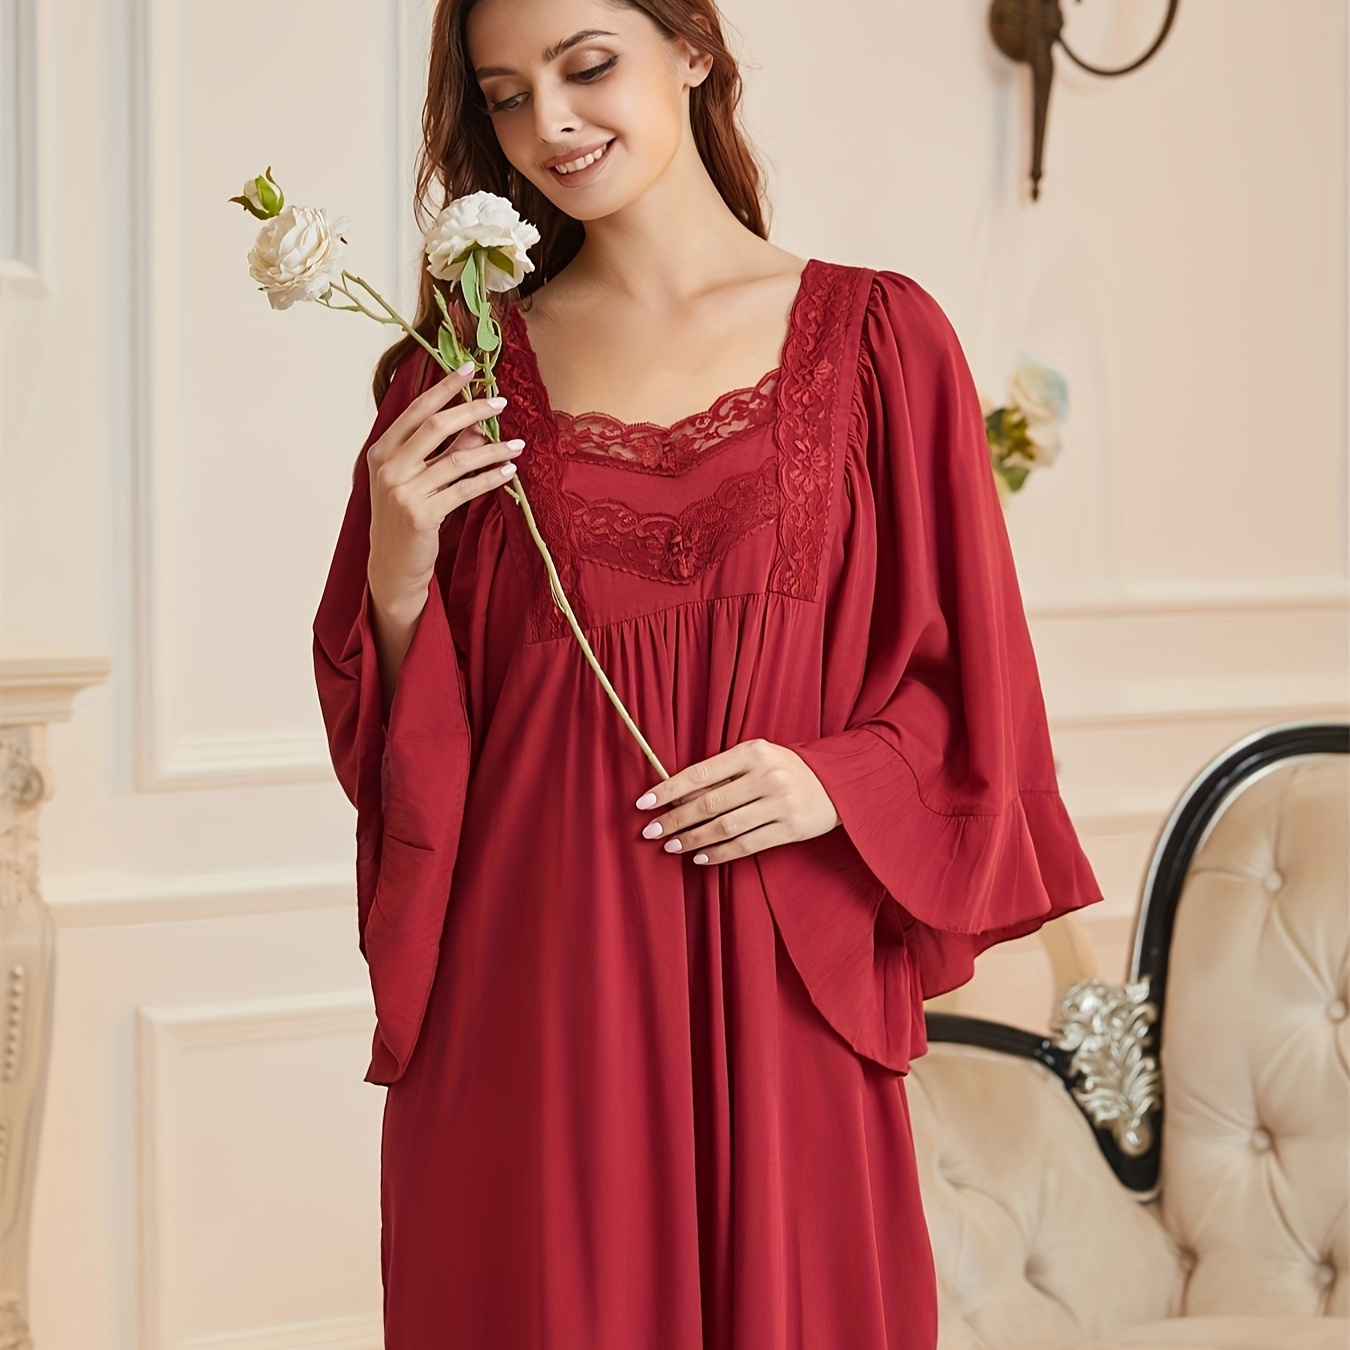 

Retro Solid Contrast Lace Nightgown, 3 Quarter Flutter Sleeve Square Neck Loose Fit Ruffle Hem Maxi Dress, Women's Sleepwear